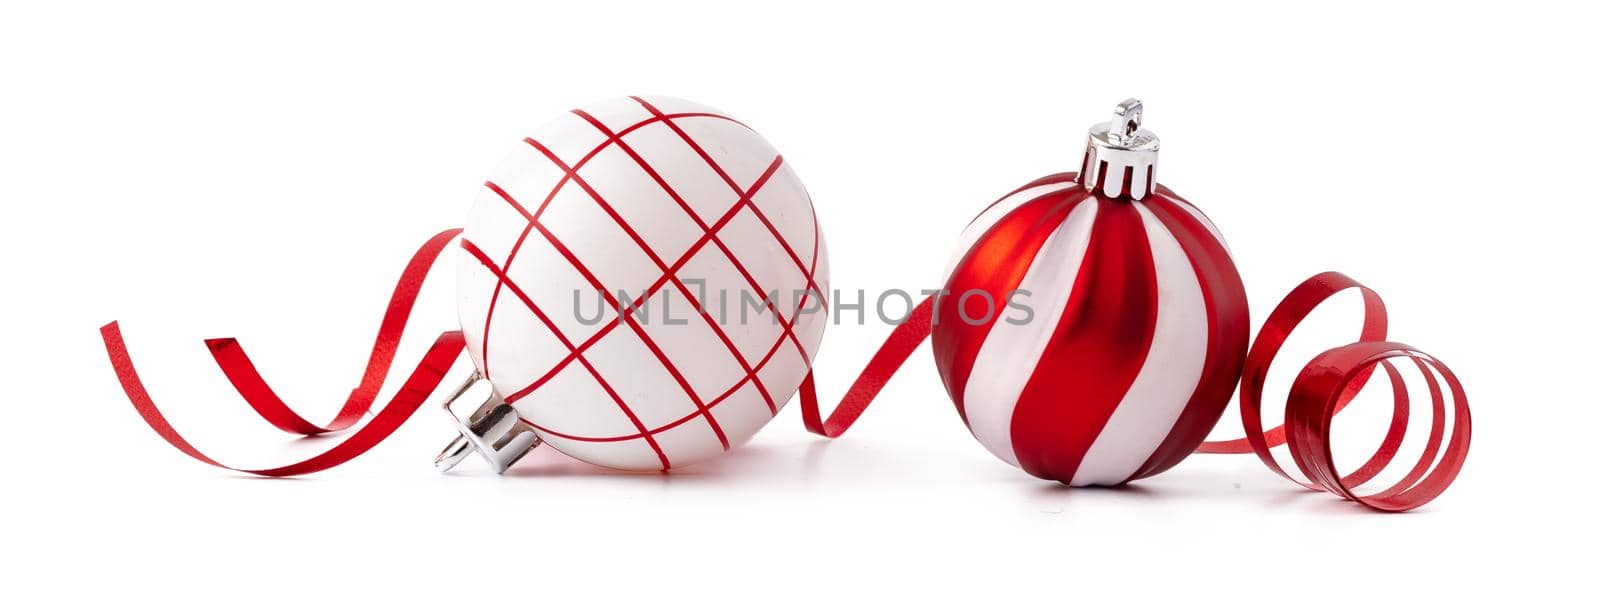 Christmas decoration balls isolated on white background by Fabrikasimf